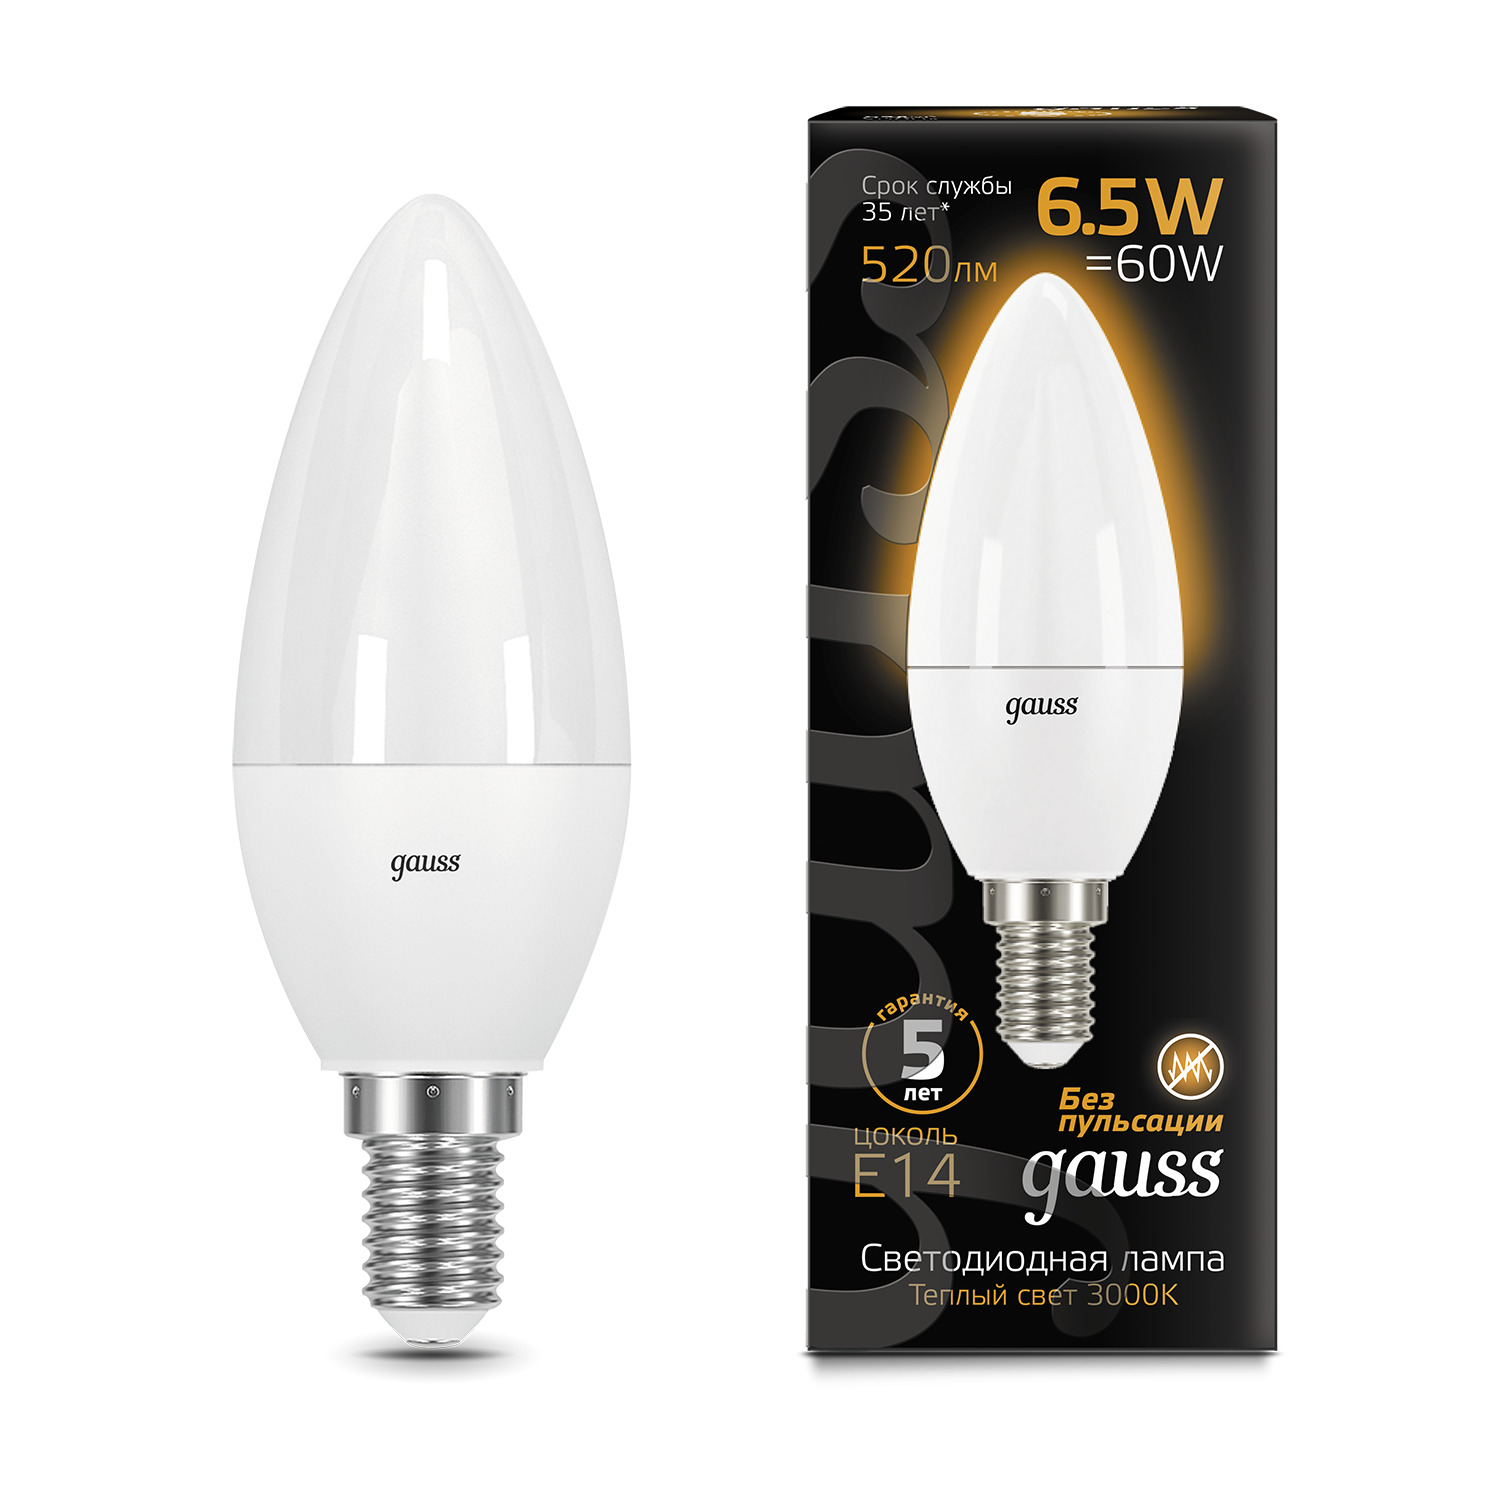 Лампа Gauss LED Candle E14 6.5W 2700К gauss led elementary candle 6w e14 3000k 1 10 100